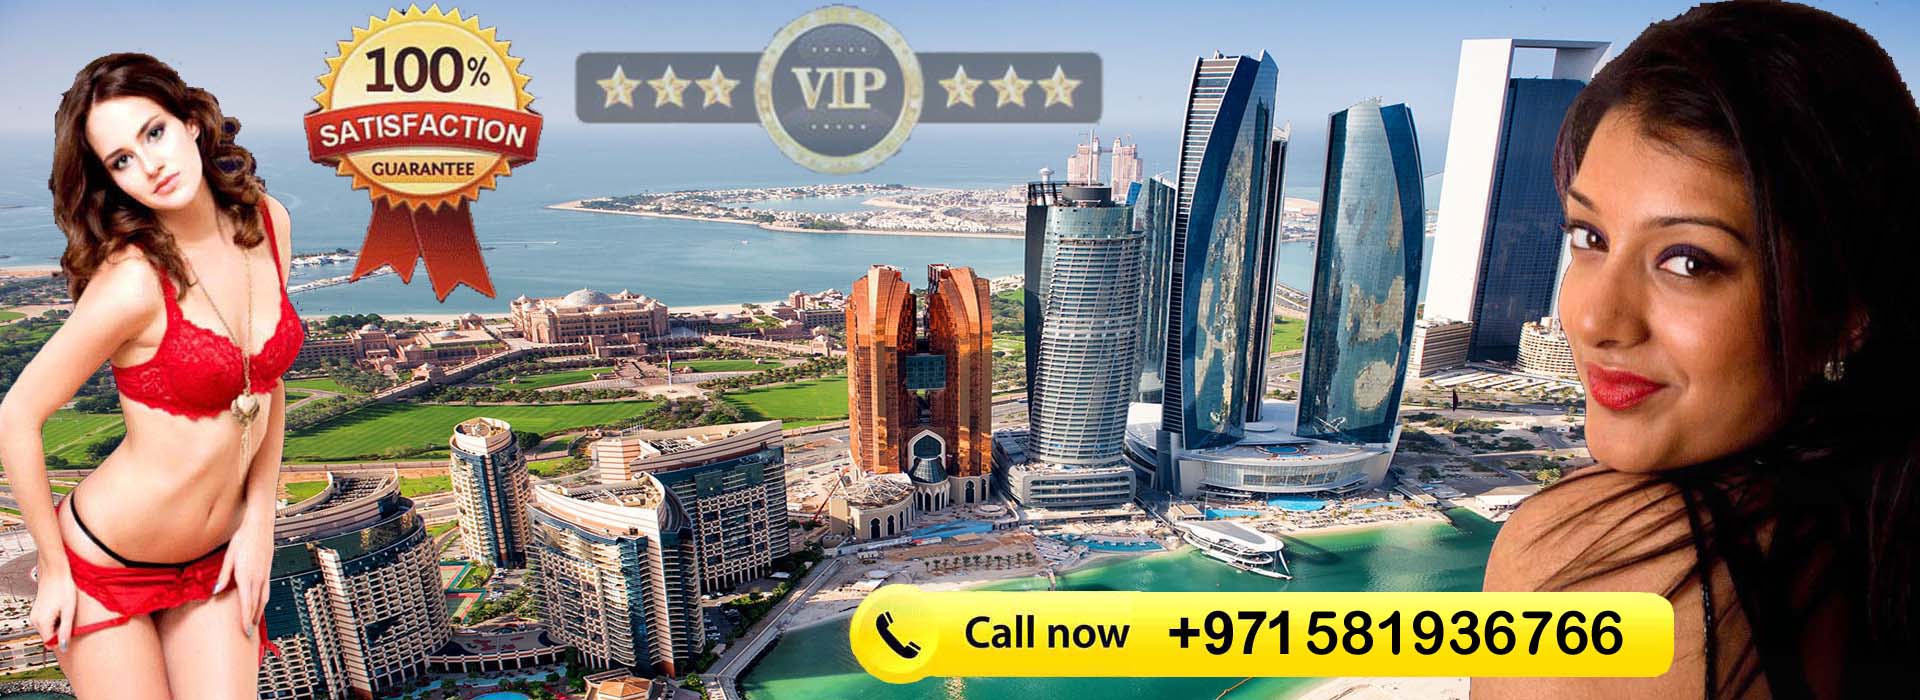 5 Star Hotel Escorts in Dubai